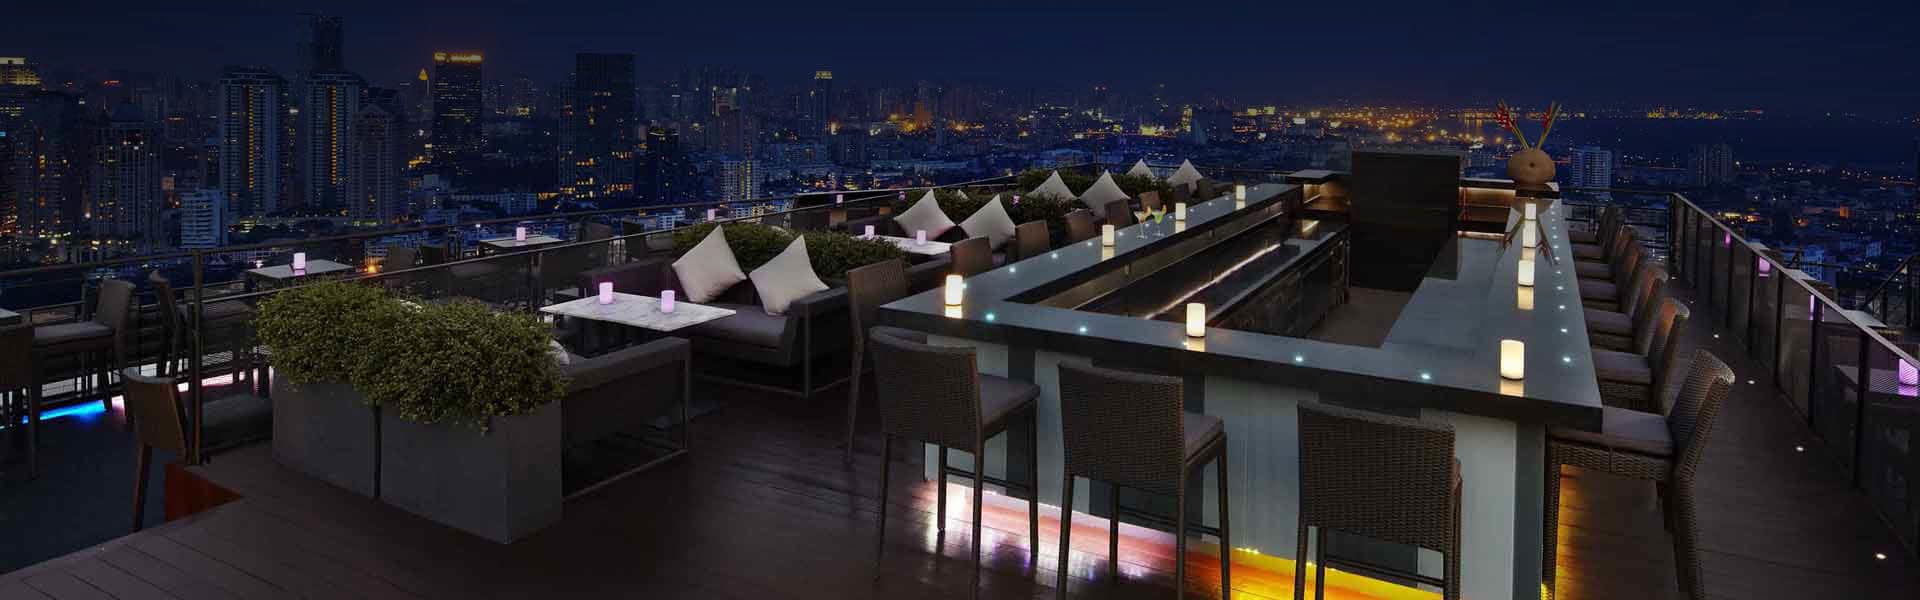 Bangkok Rooftop Restaurant Zoom Sky Bar Restaurant At